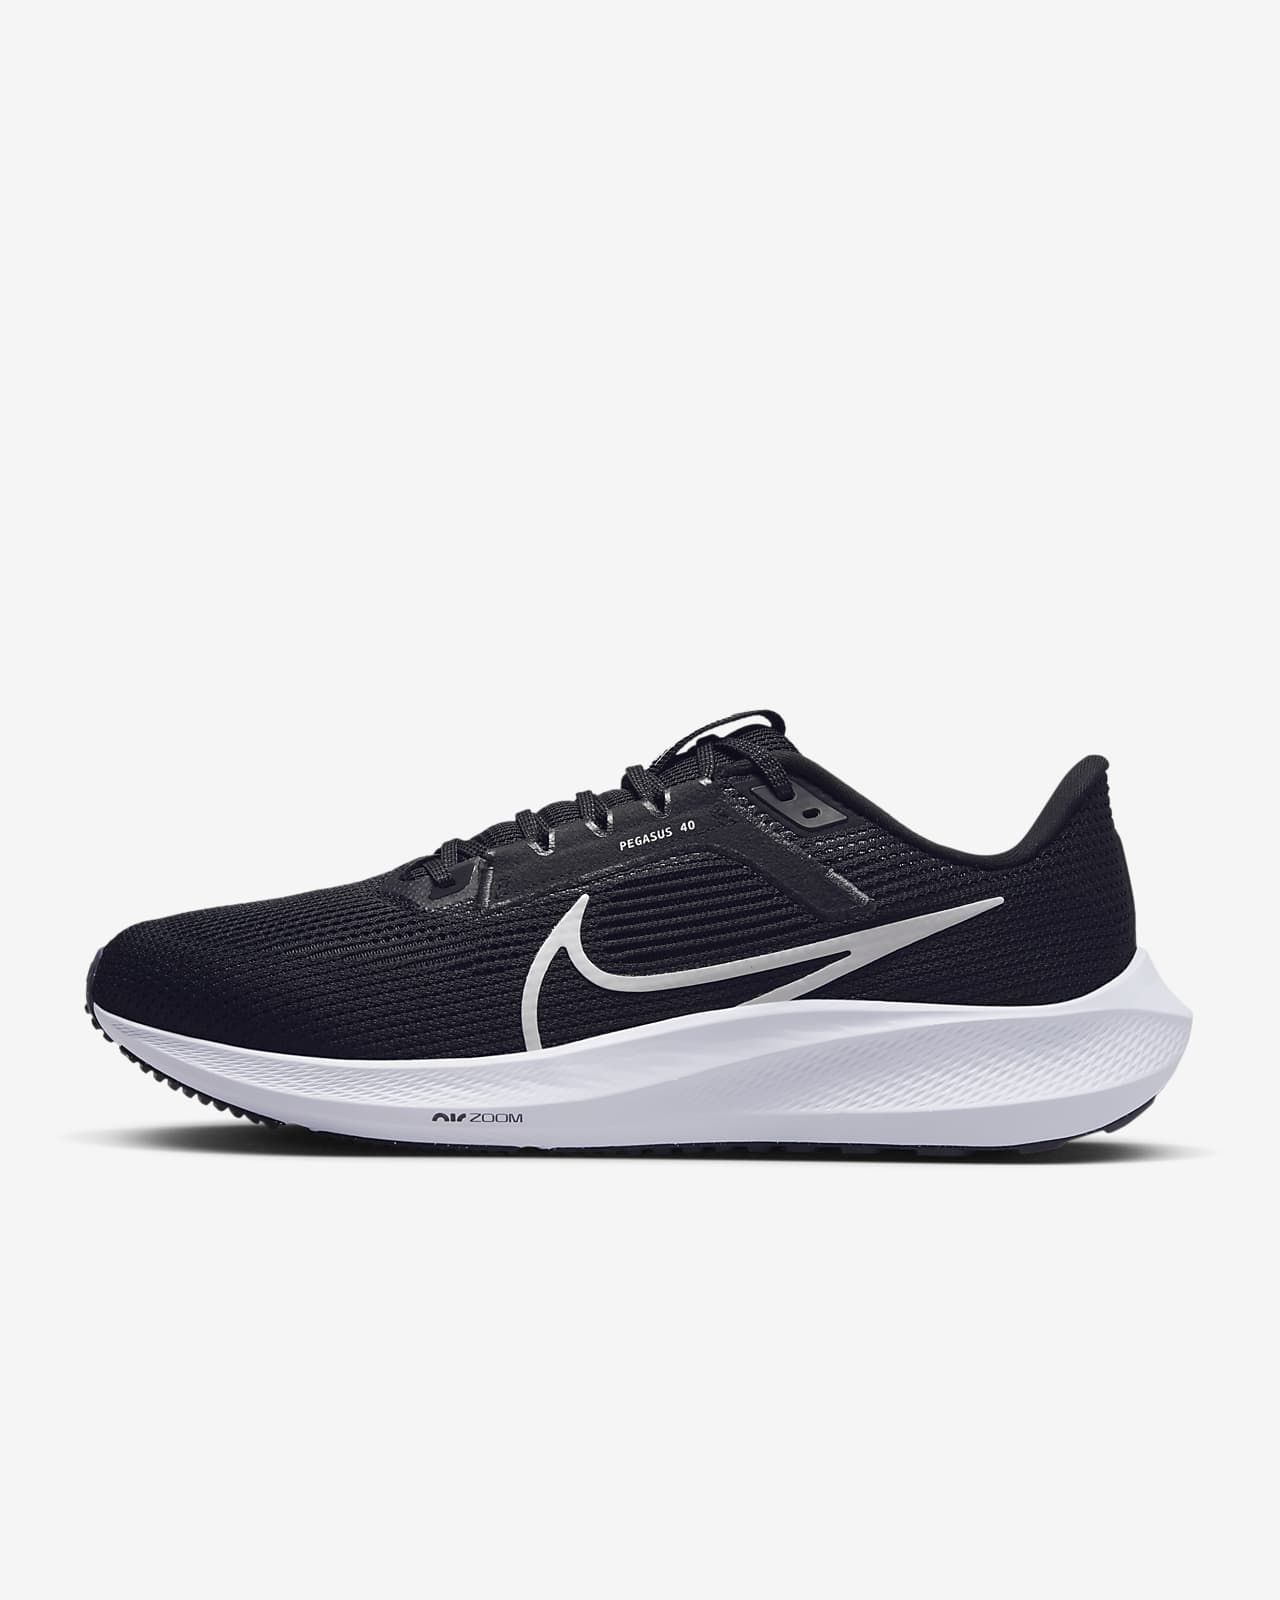 Men's Road Running Shoes | Nike (US)